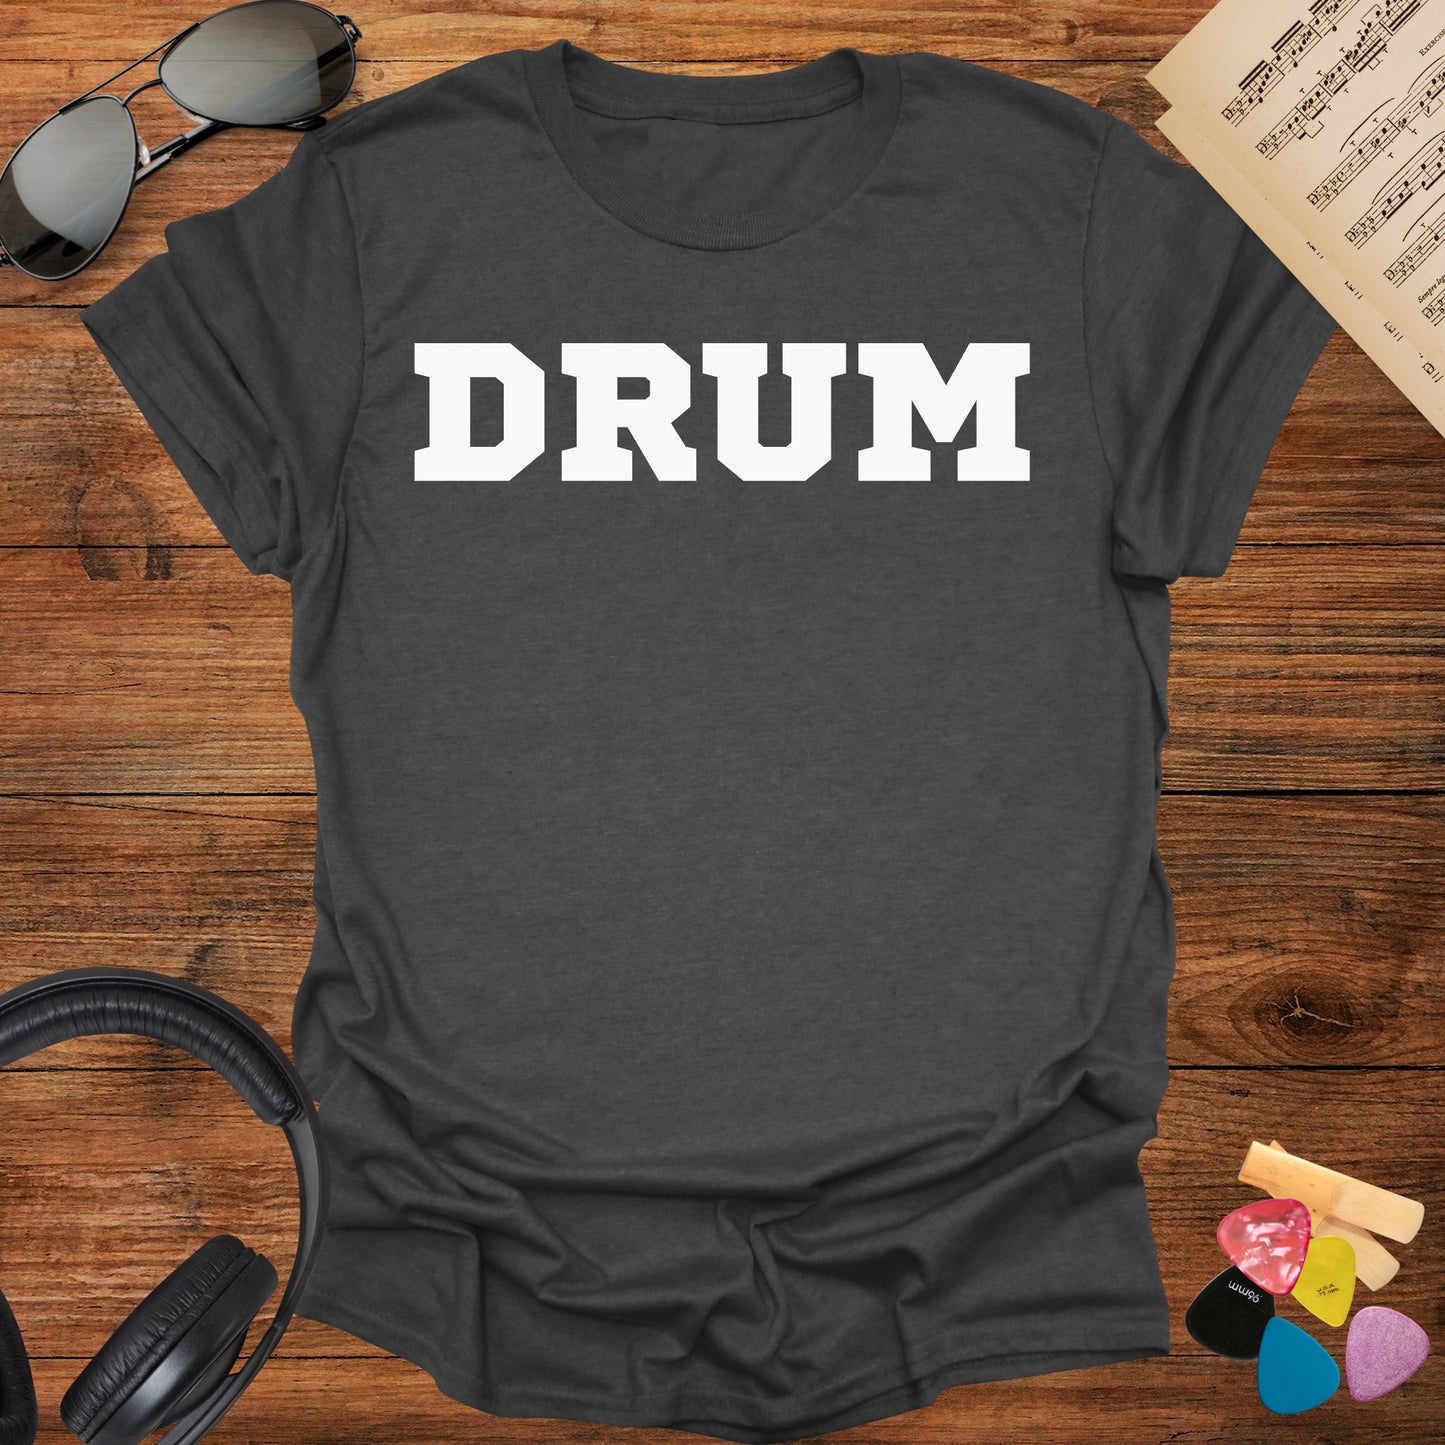 Drum T-shirt